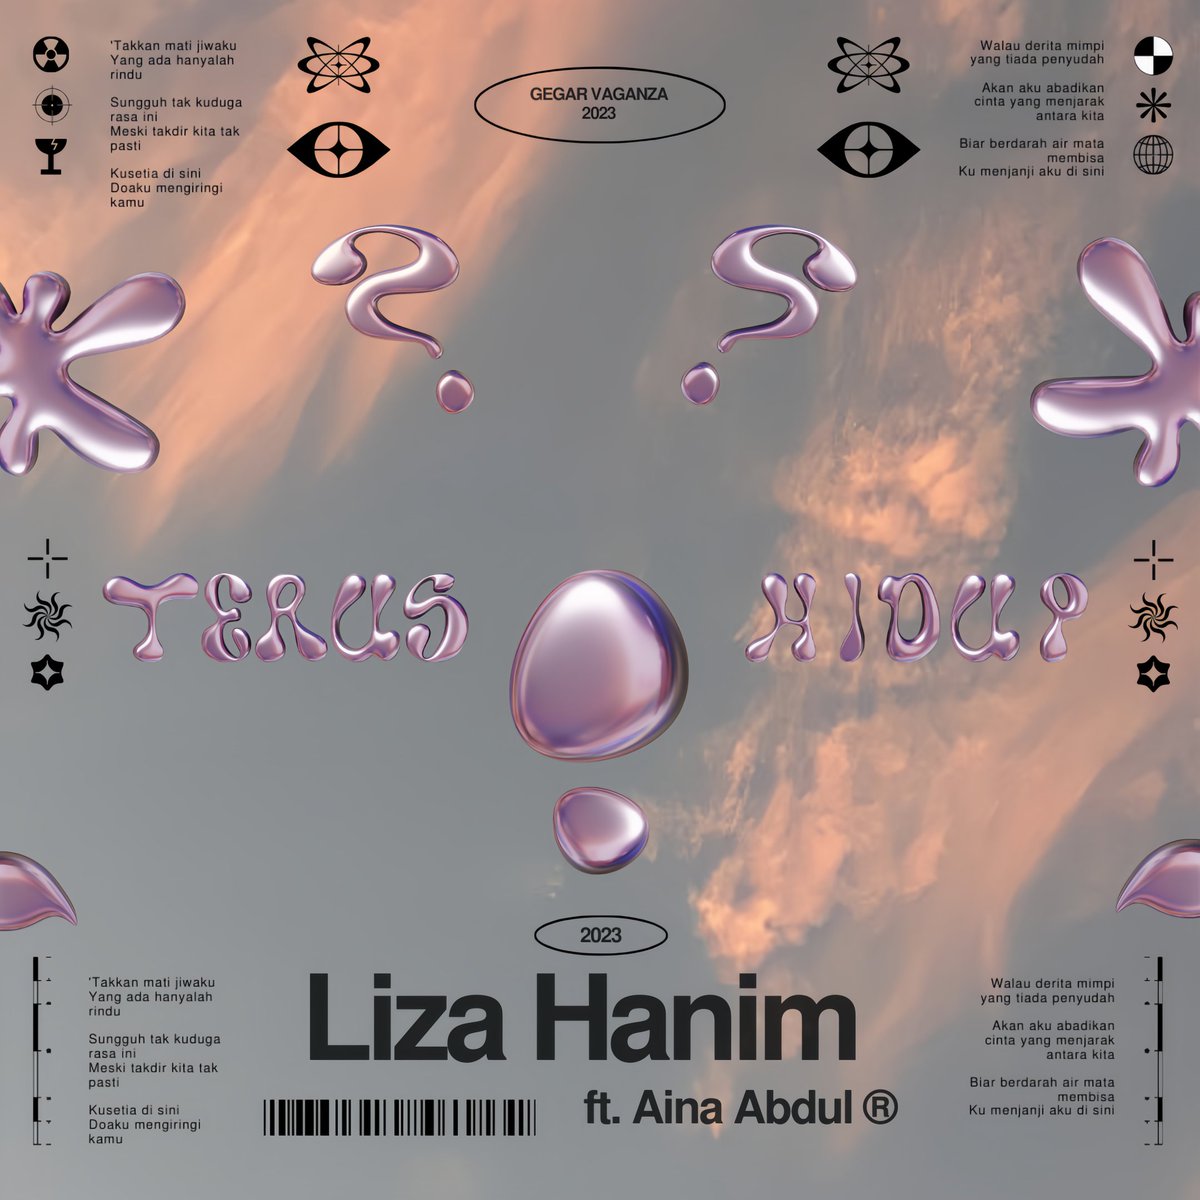 Liza Hanim - Terus Hidup (ft. Aina Abdul)

#GV10LIZAHANIM #CUCKOOXGV10
#GegarVaganza2023 #AINAABDUL